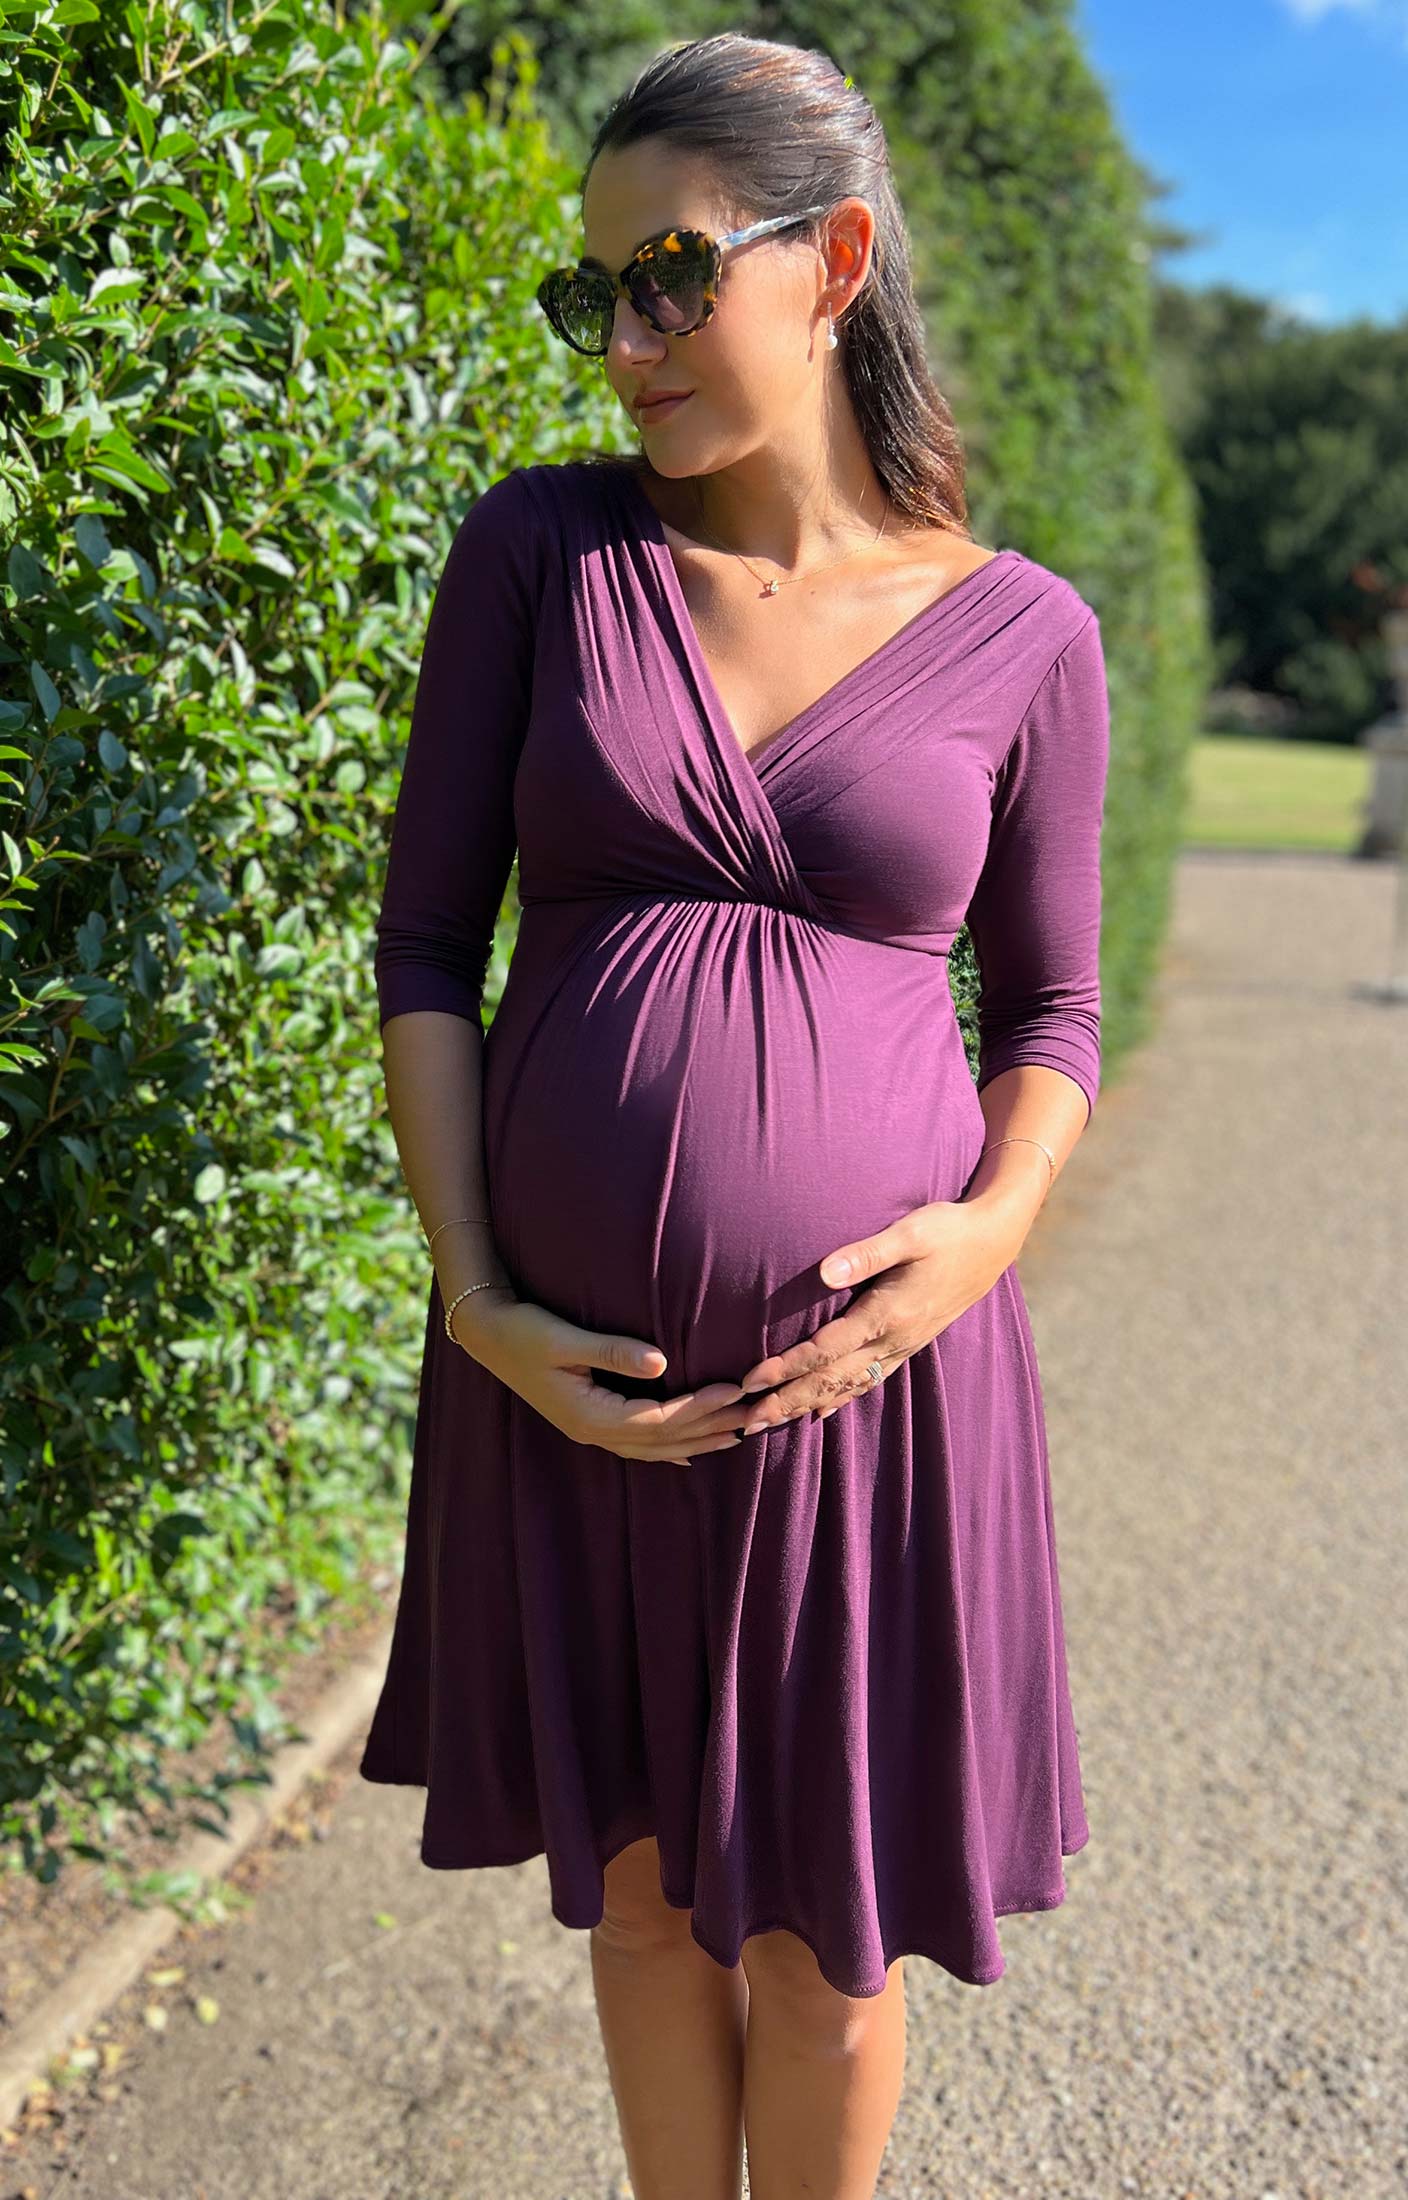 Good News Maternity Wear